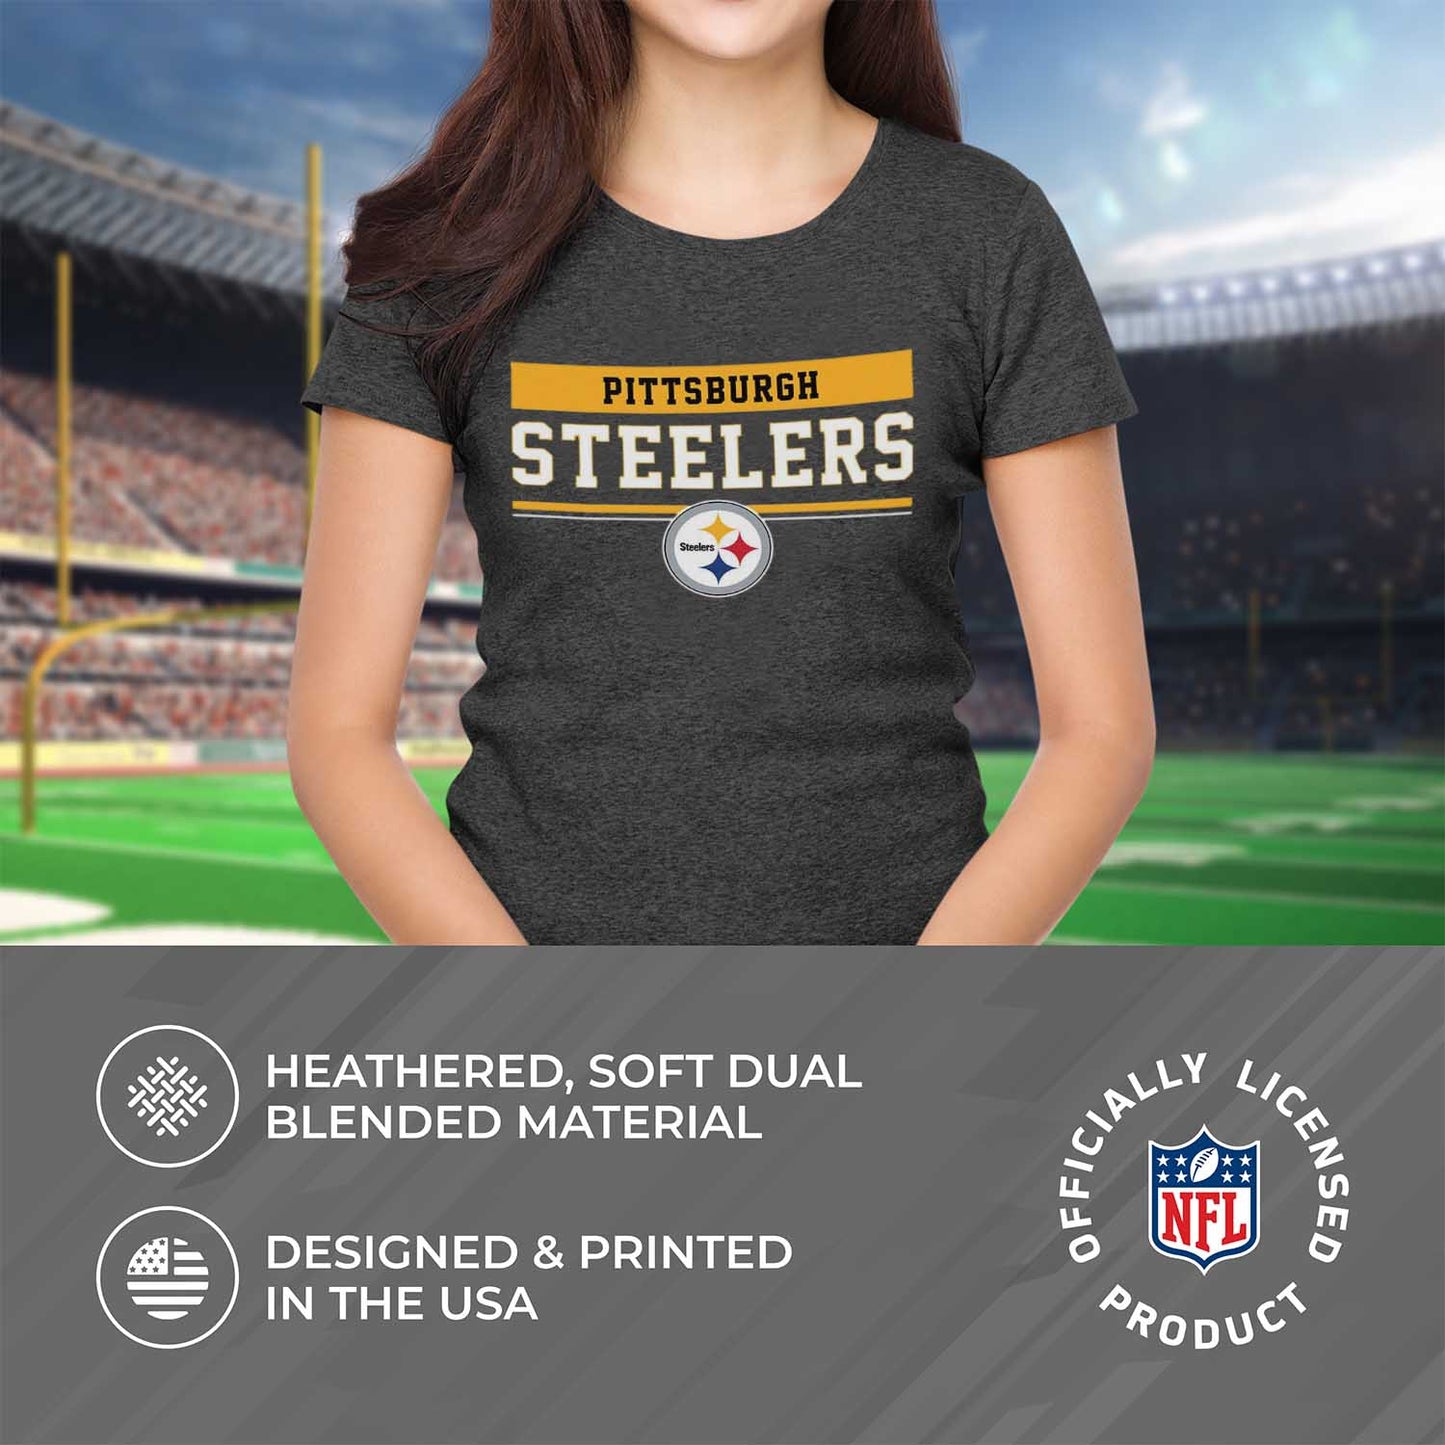 Pittsburgh Steelers NFL Women's Team Block Charcoal Tagless T-Shirt - Charcoal